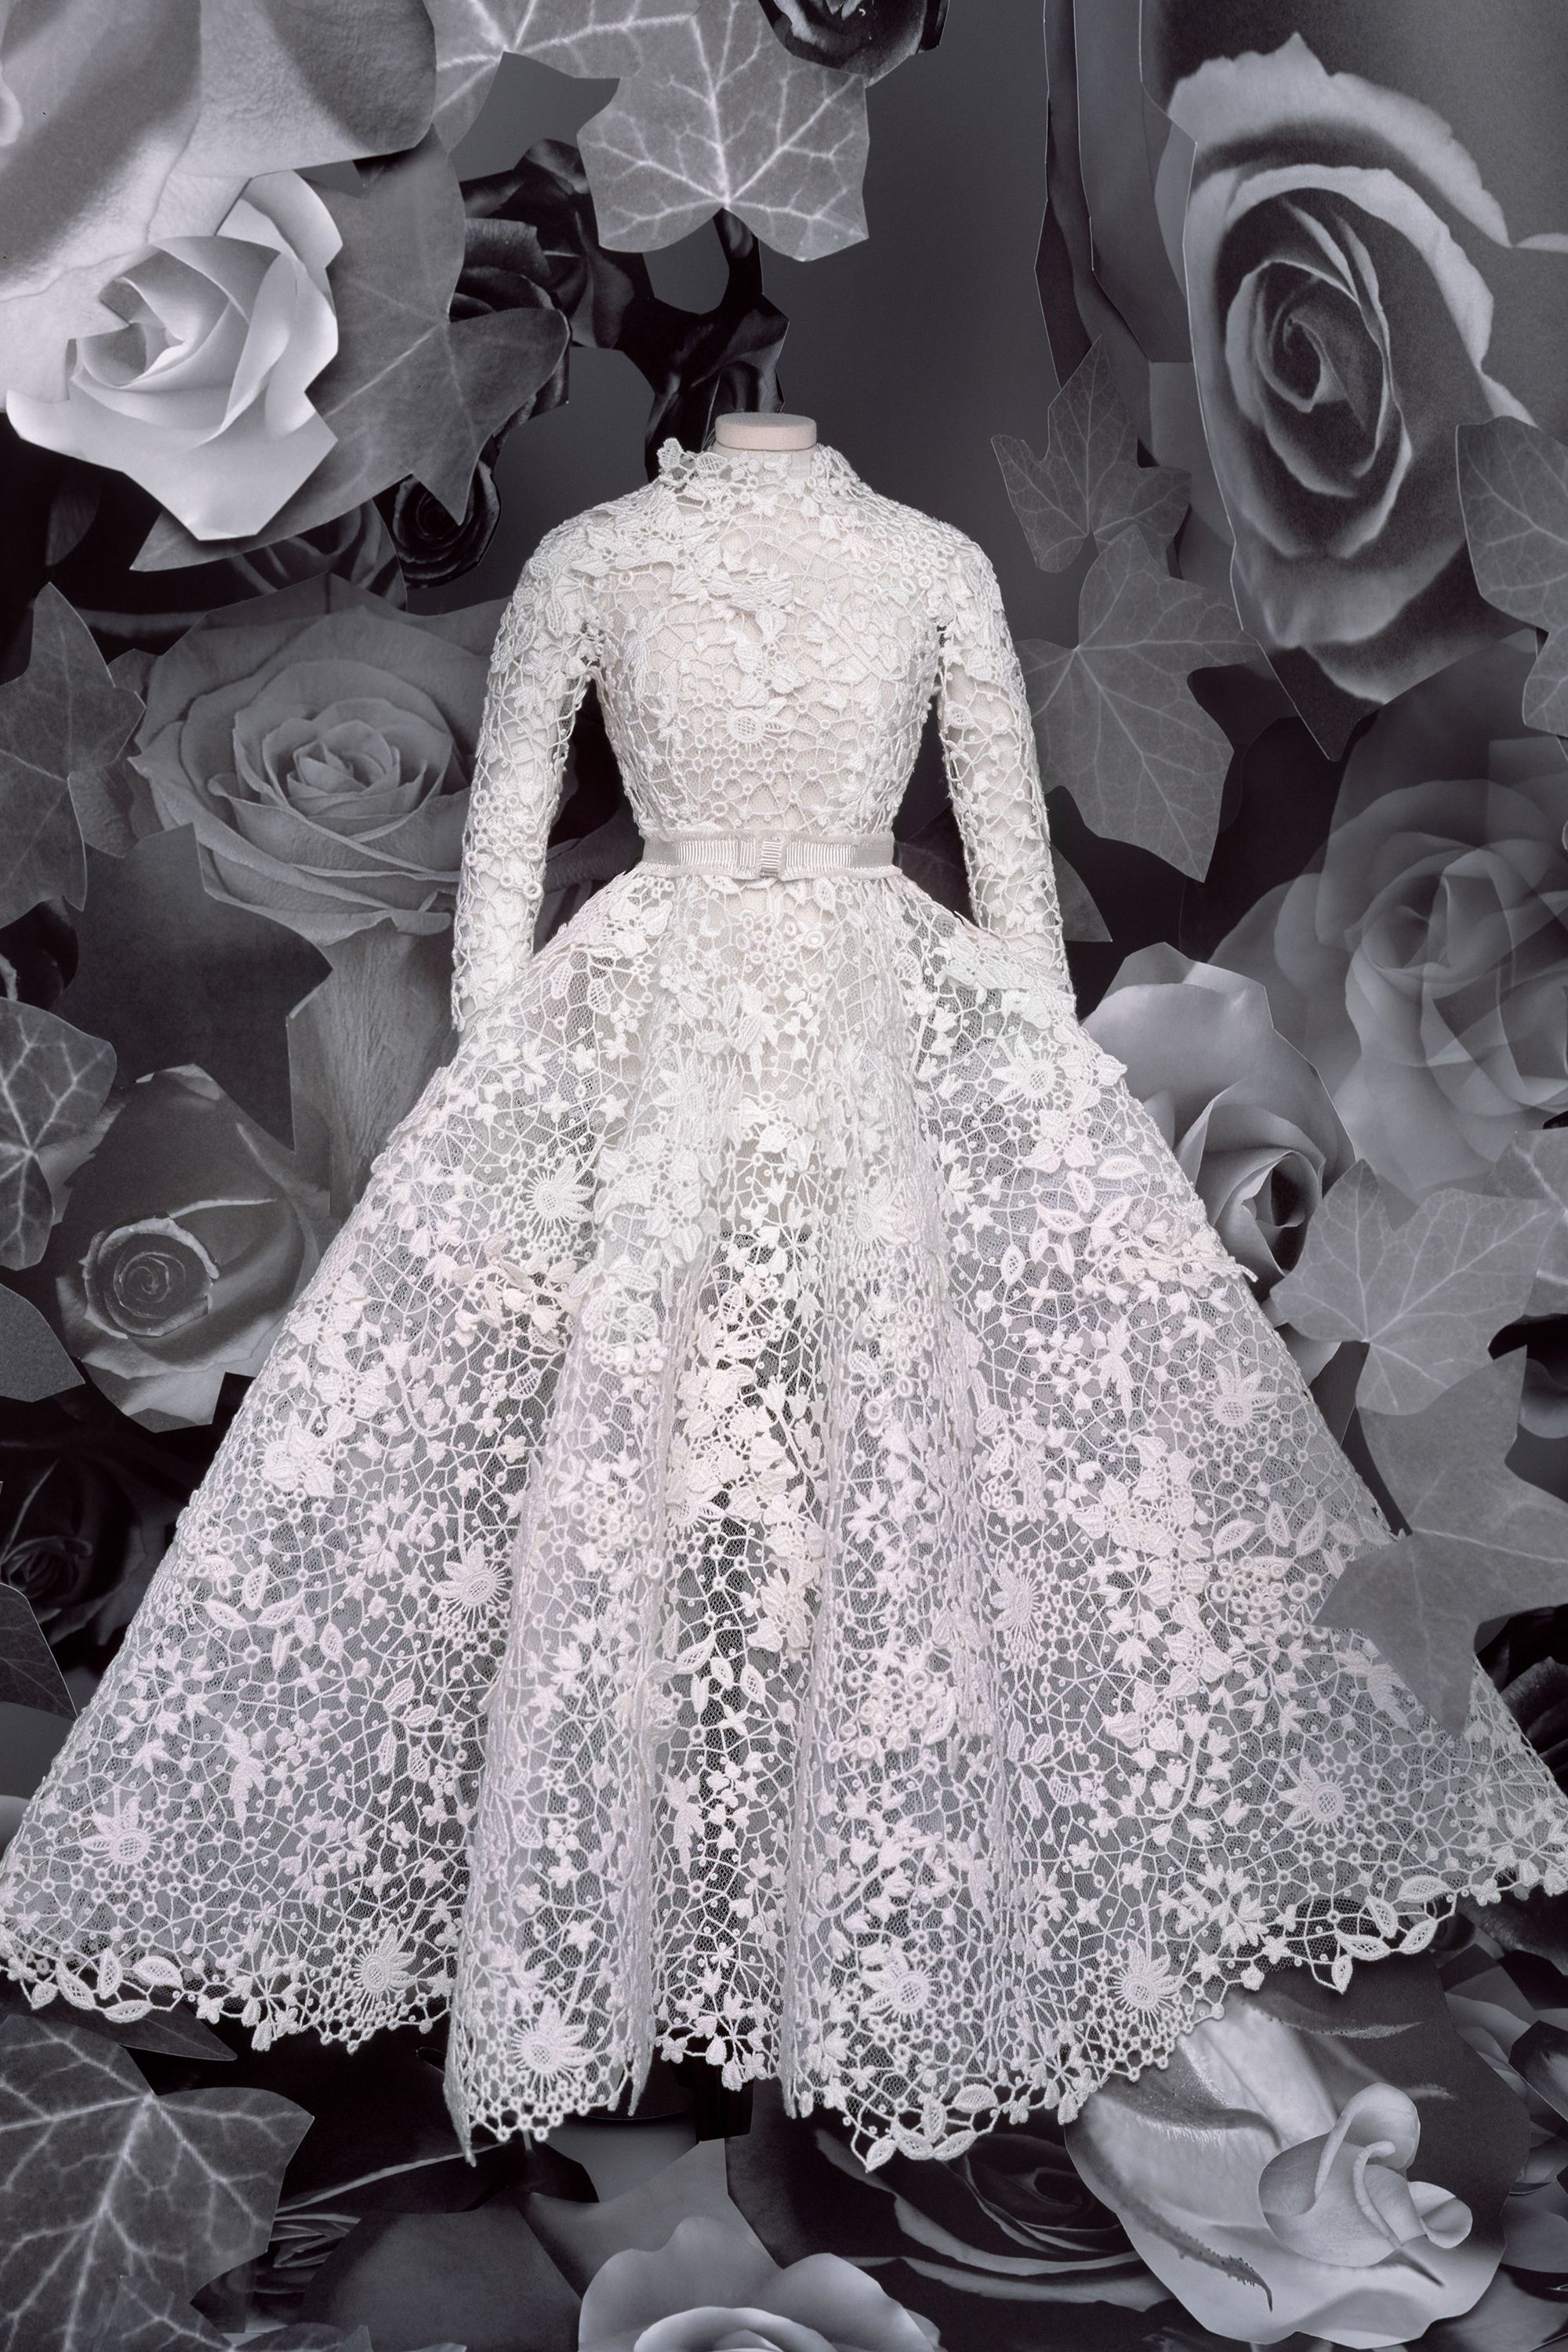 Stefano Gabbana Slams Blogger Chiara Ferragnis Dior Couture Wedding Dress